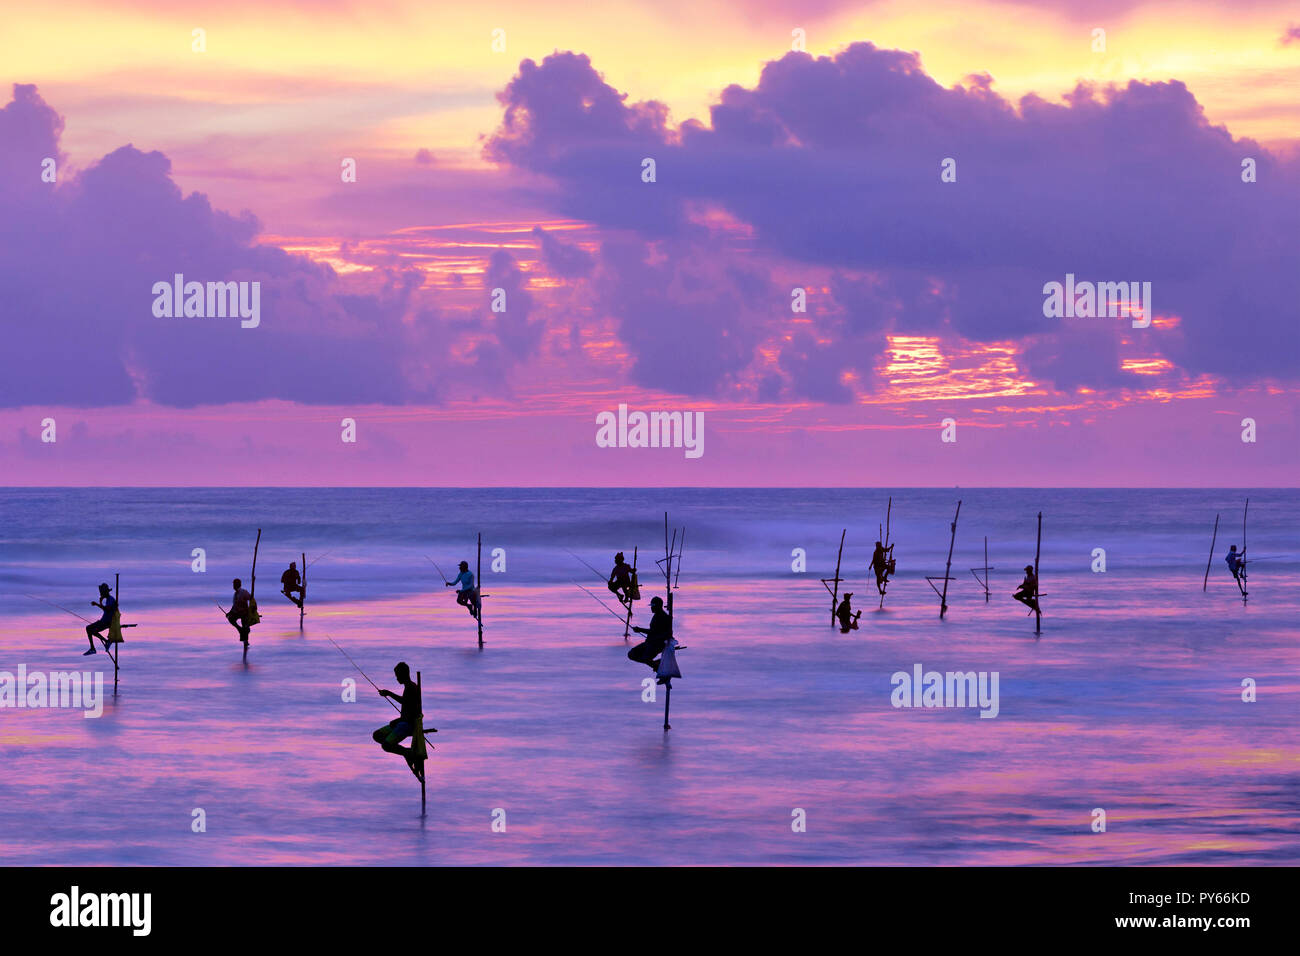 Fishermen on stilts in silhouette at the sunset in Galle, Sri Lanka Stock Photo